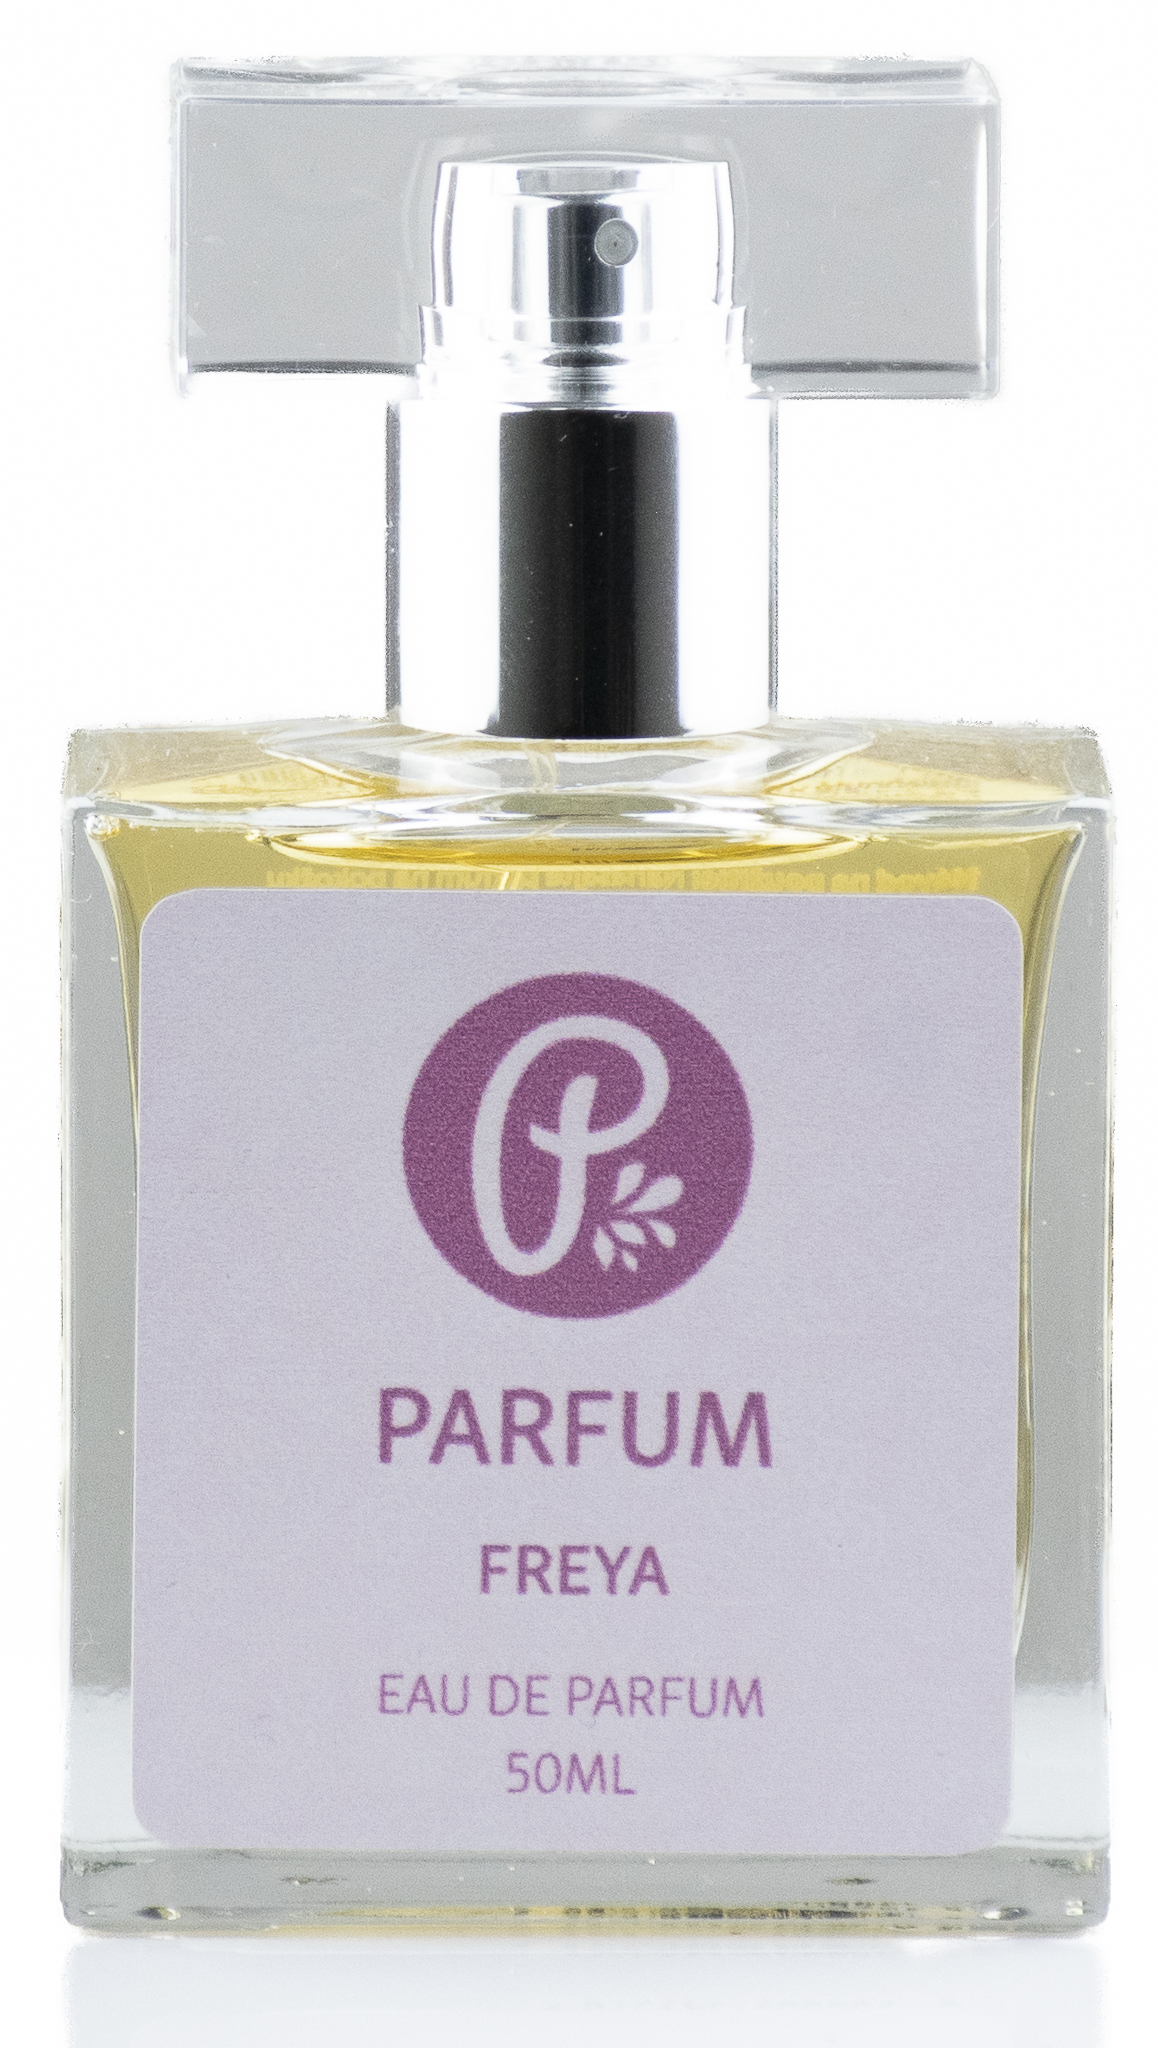 PARFUM - Freya 50ml